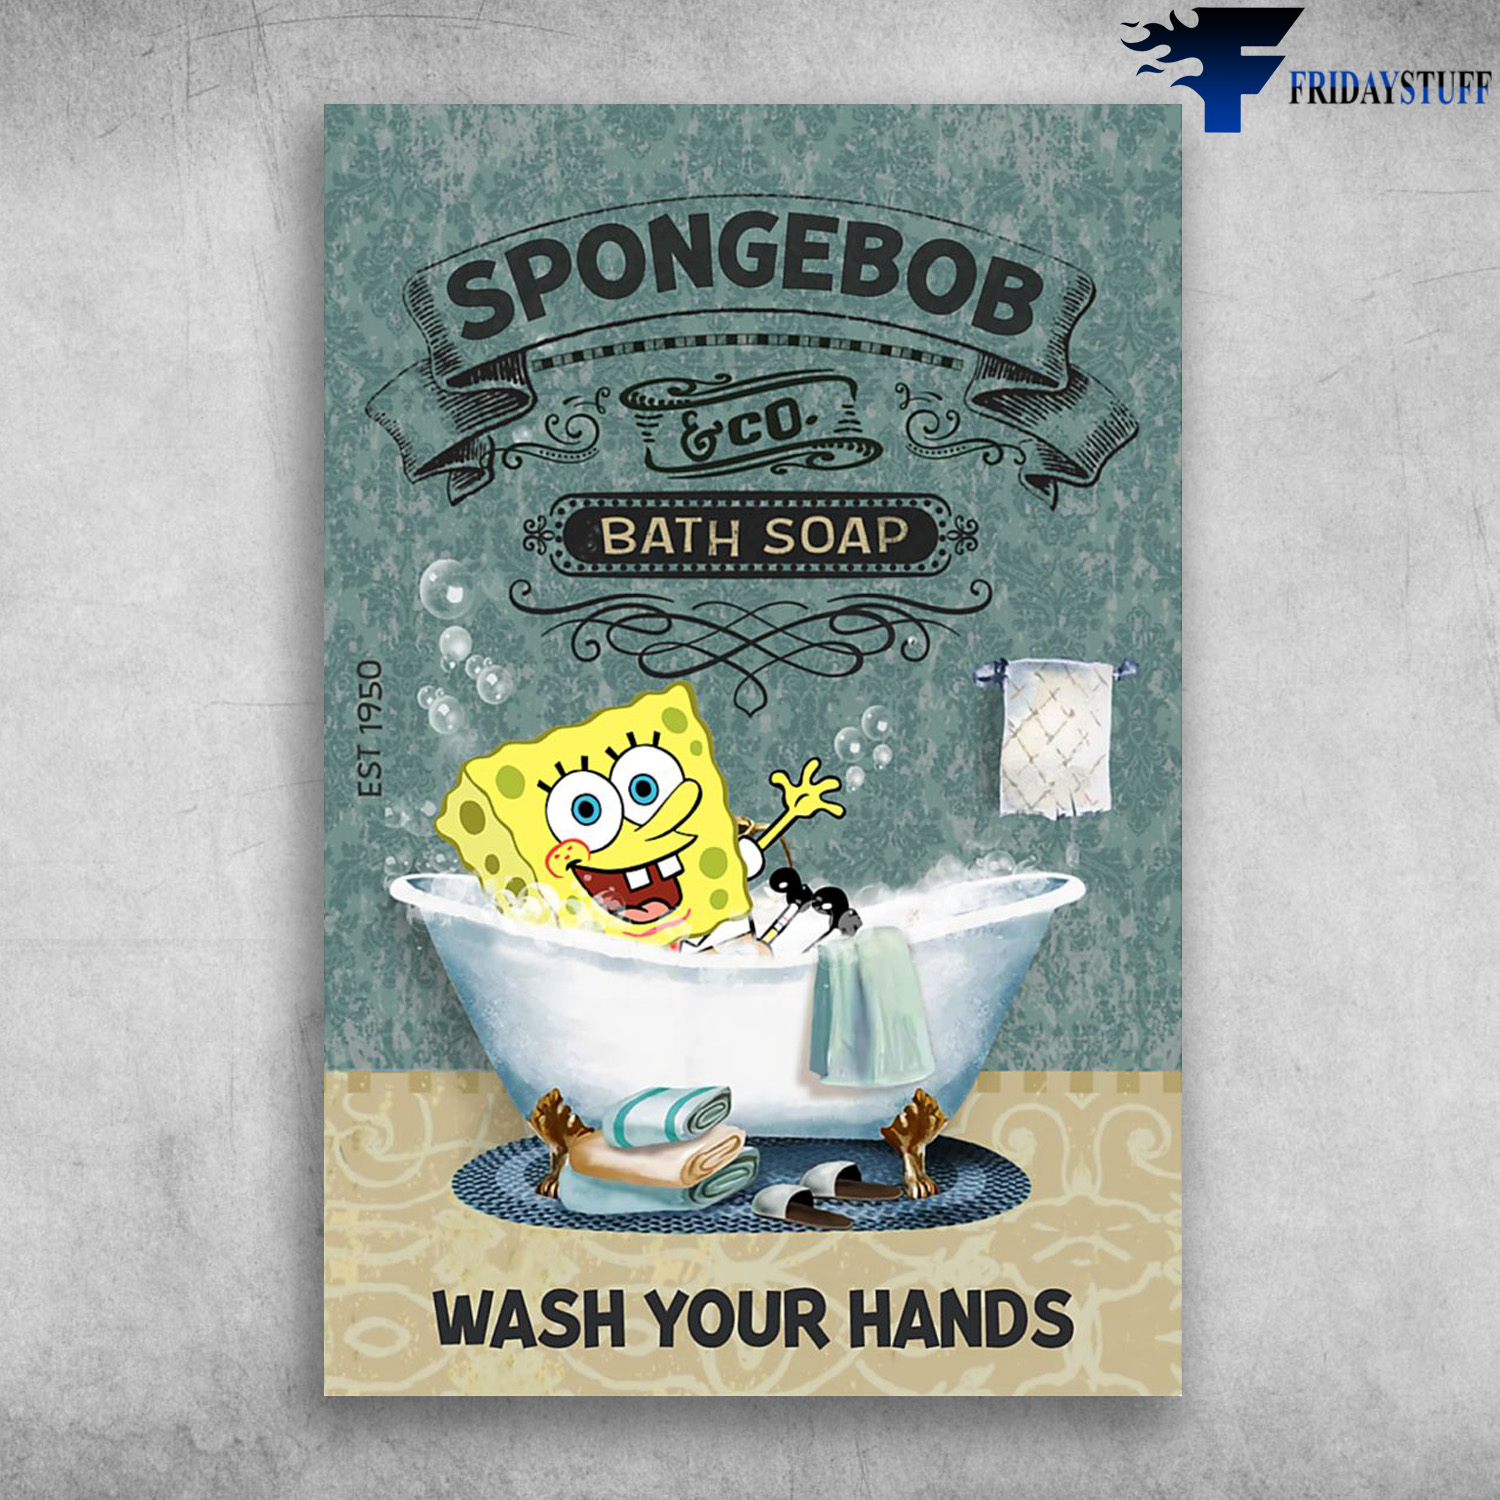 Spongebob In Bath Soap - Spongebob And Co. Bath Soap , EST 1950, Wash Your Hands